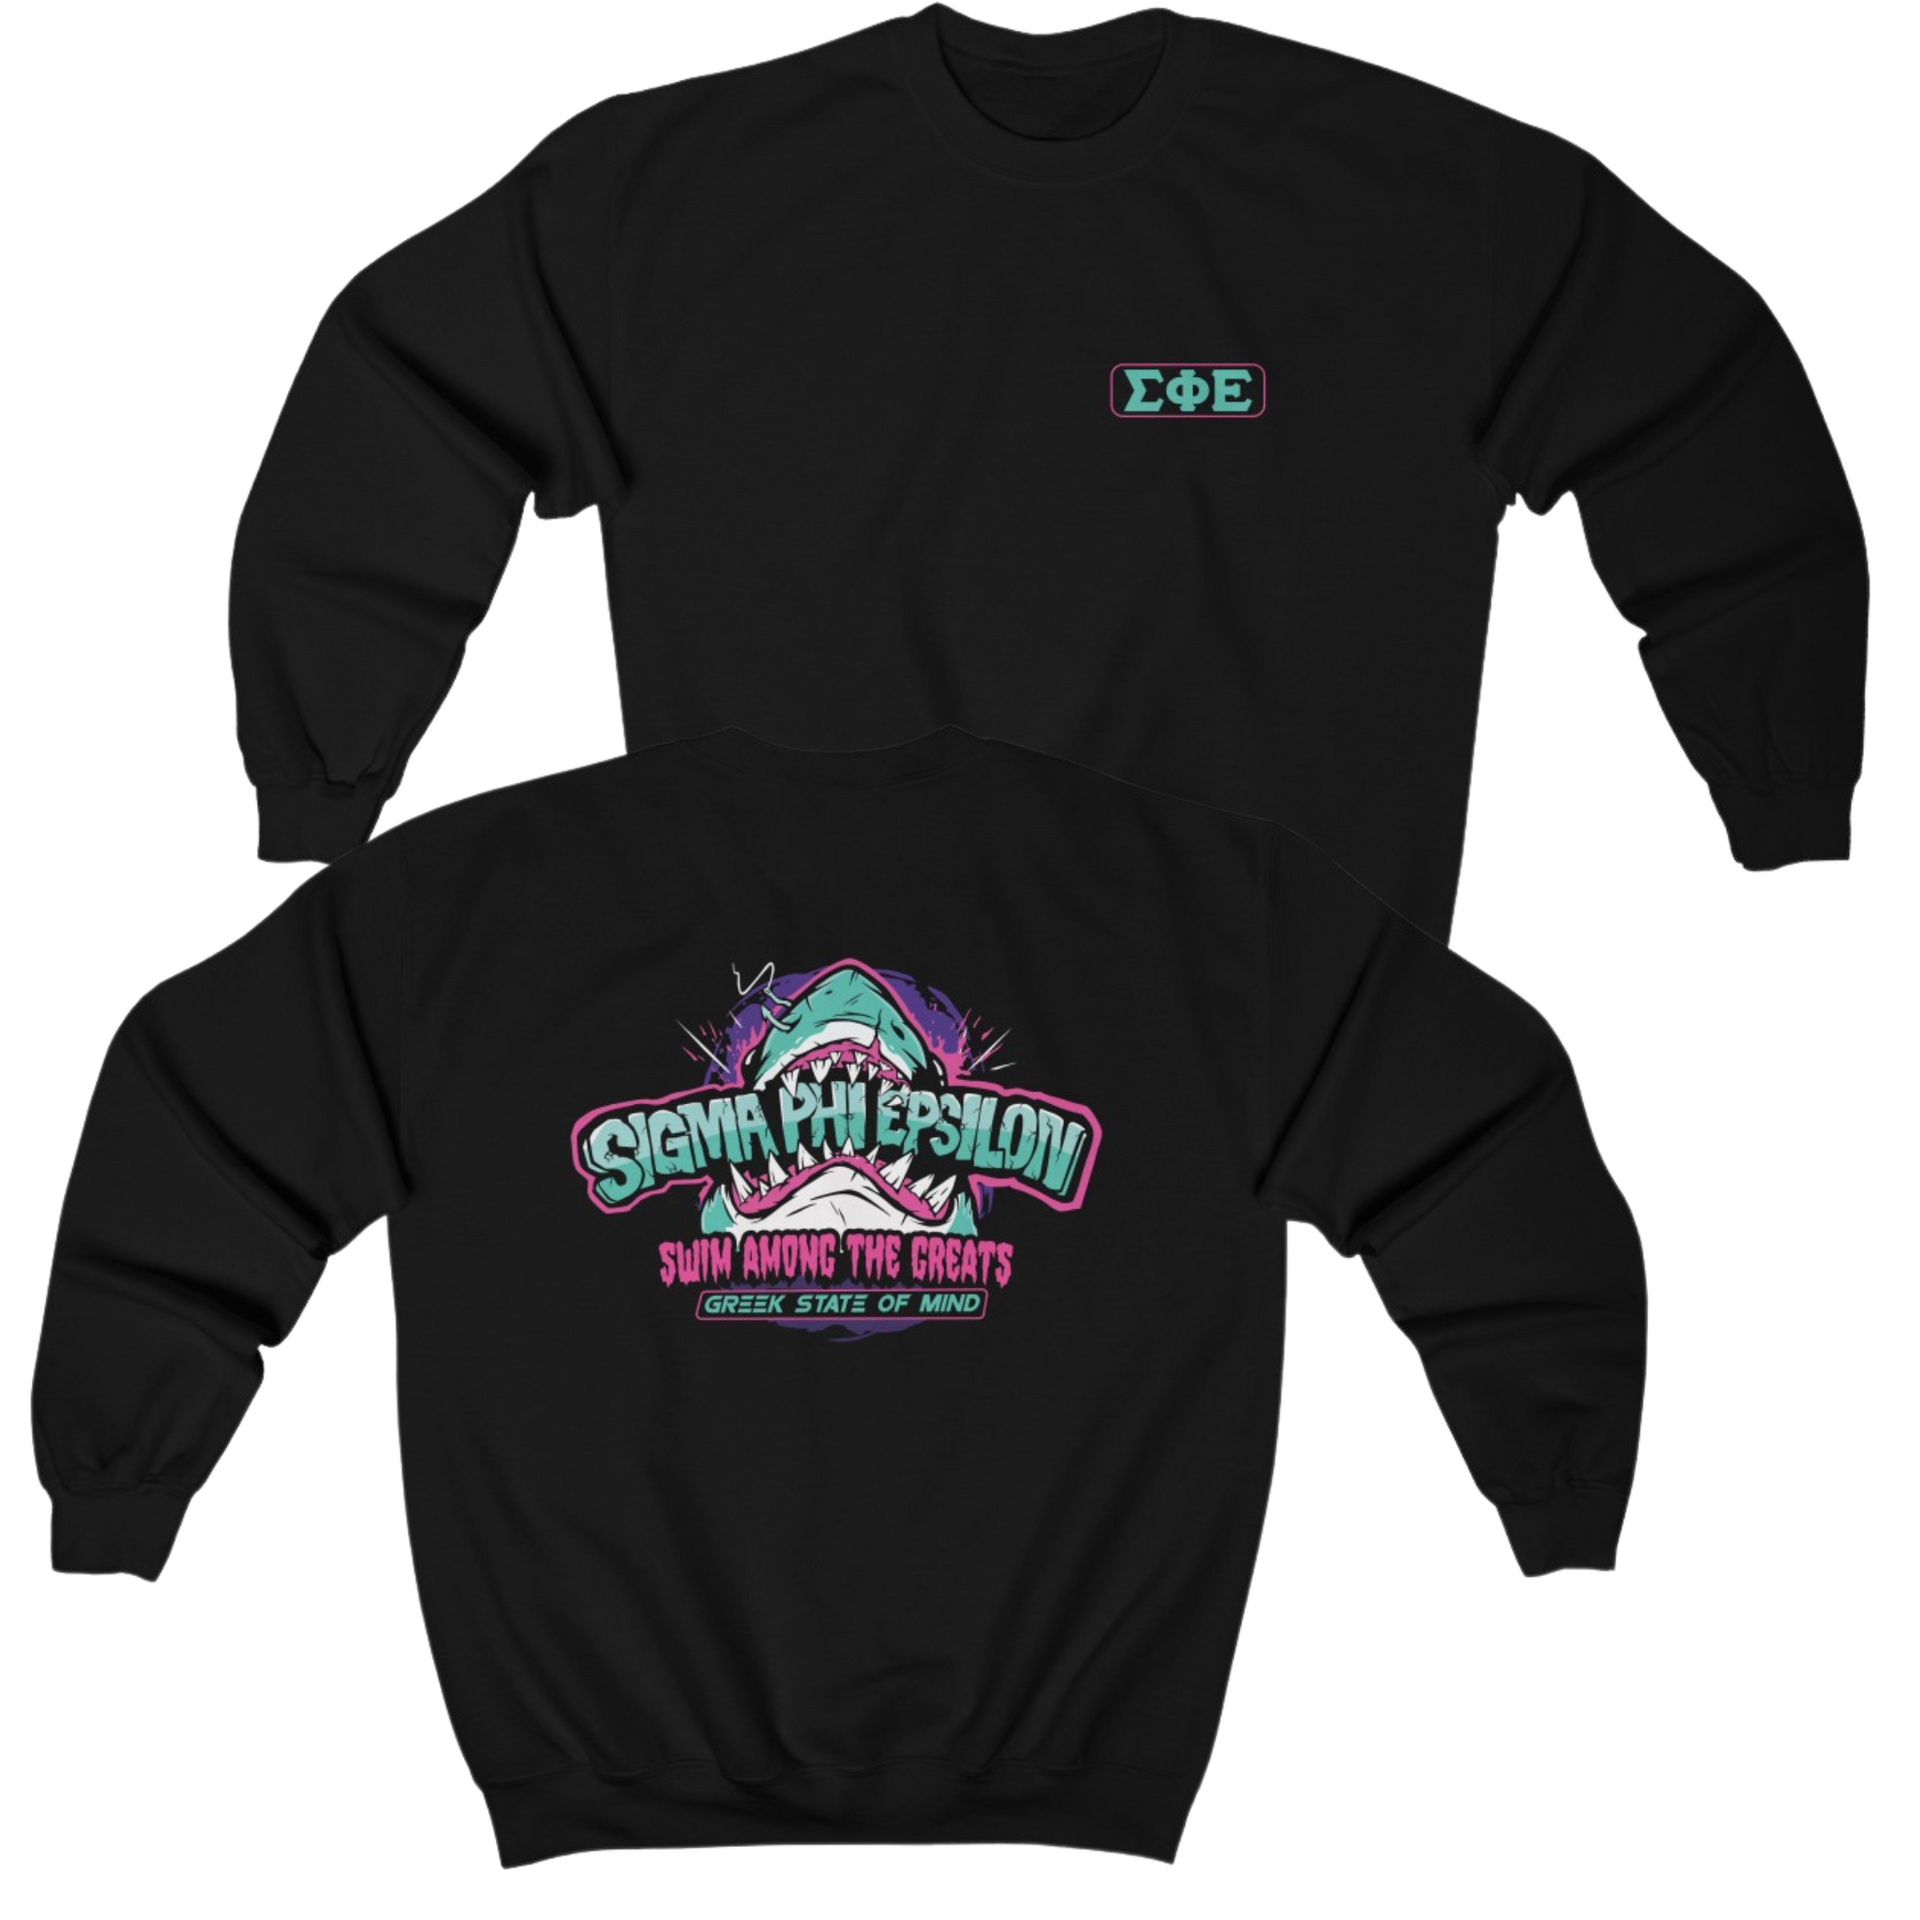 Black Sigma Phi Epsilon Graphic Crewneck Sweatshirt | The Deep End | SigEp Fraternity Clothes and Merchandise